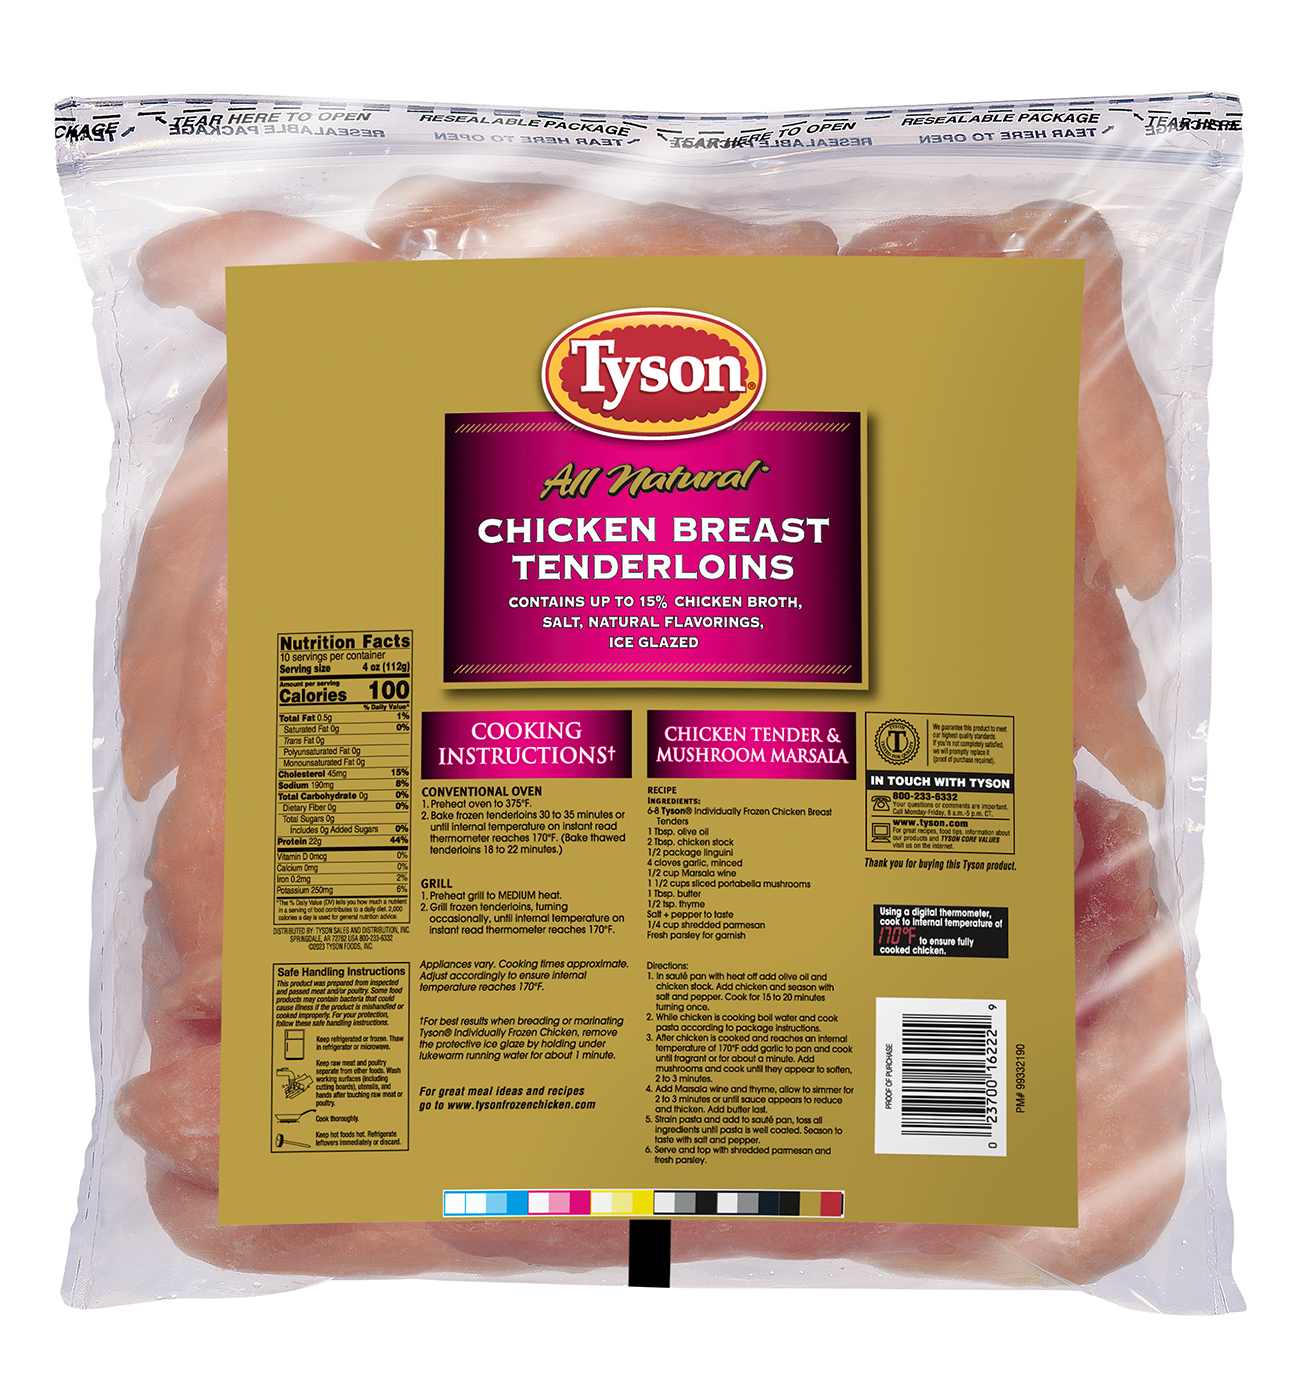 Tyson Frozen Chicken Breast Tenderloins; image 2 of 3